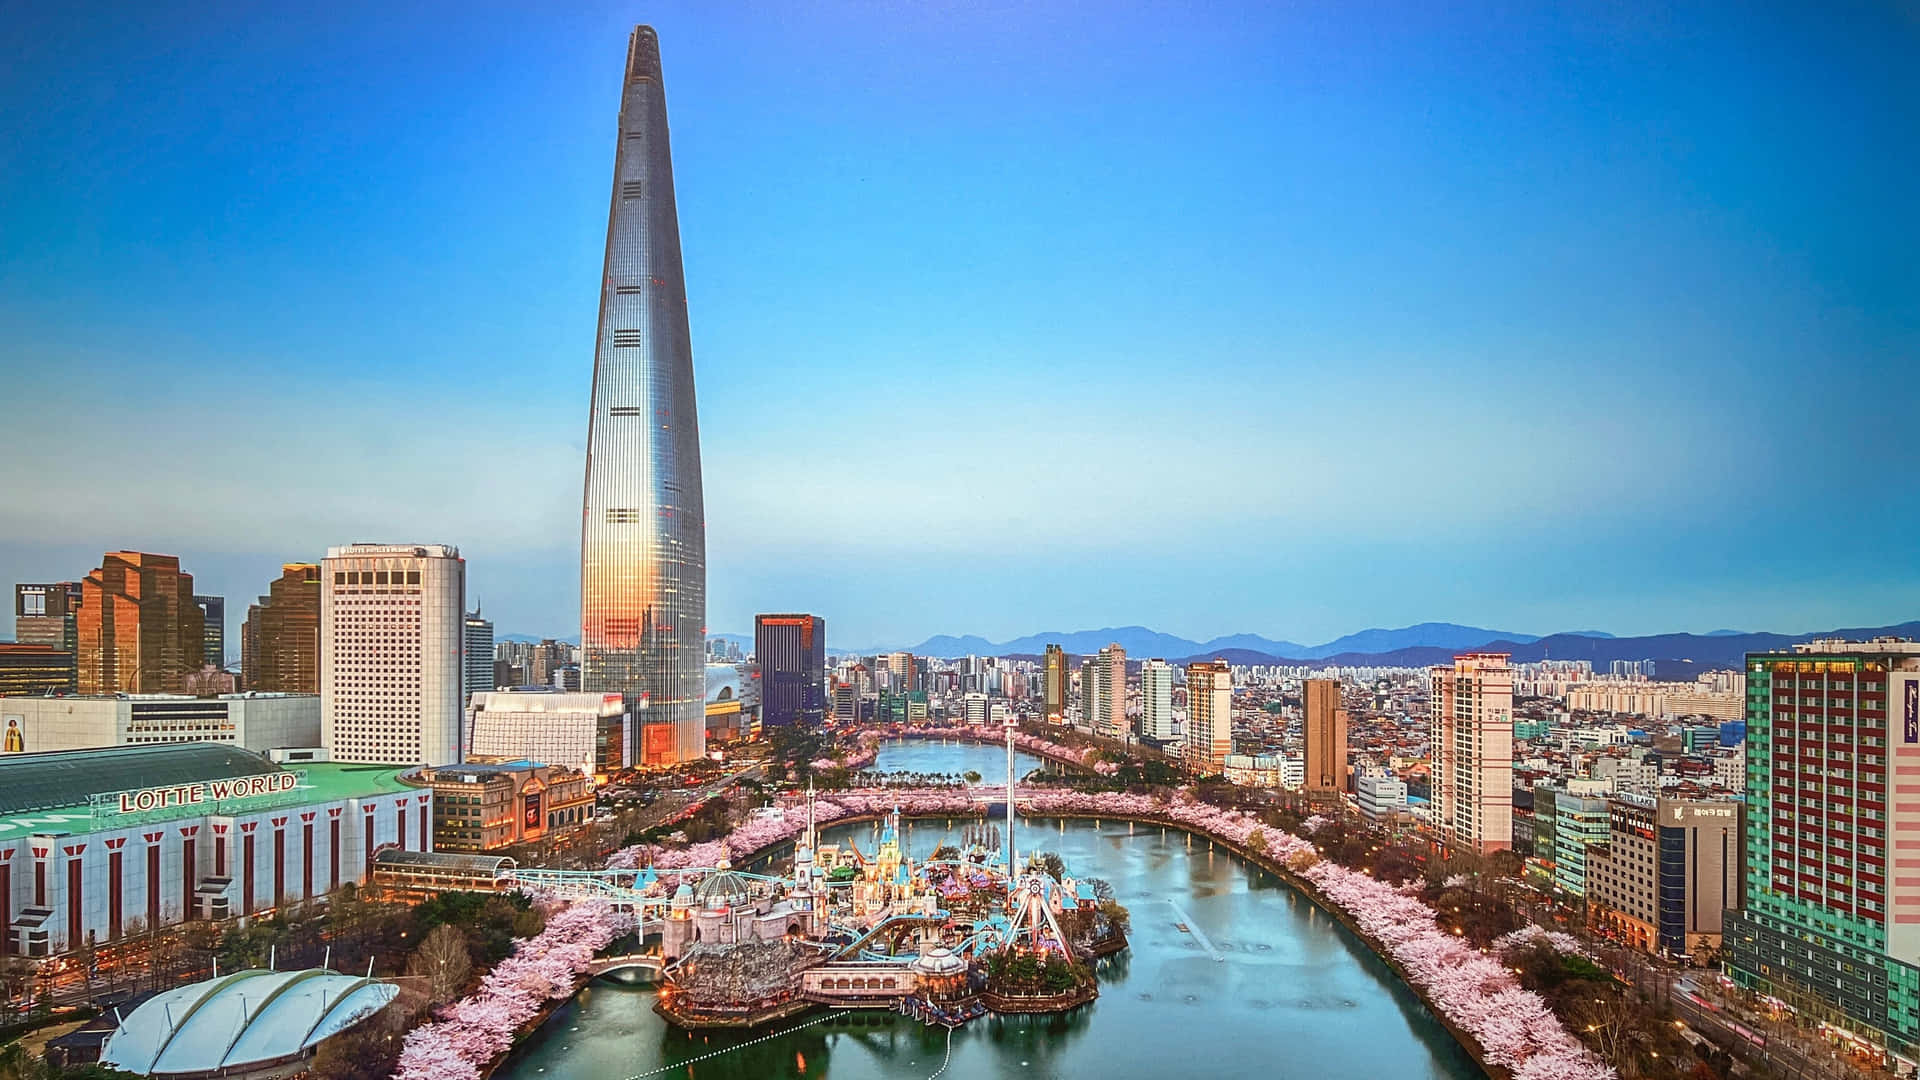 Lotte World Tower Springtime Panorama Wallpaper